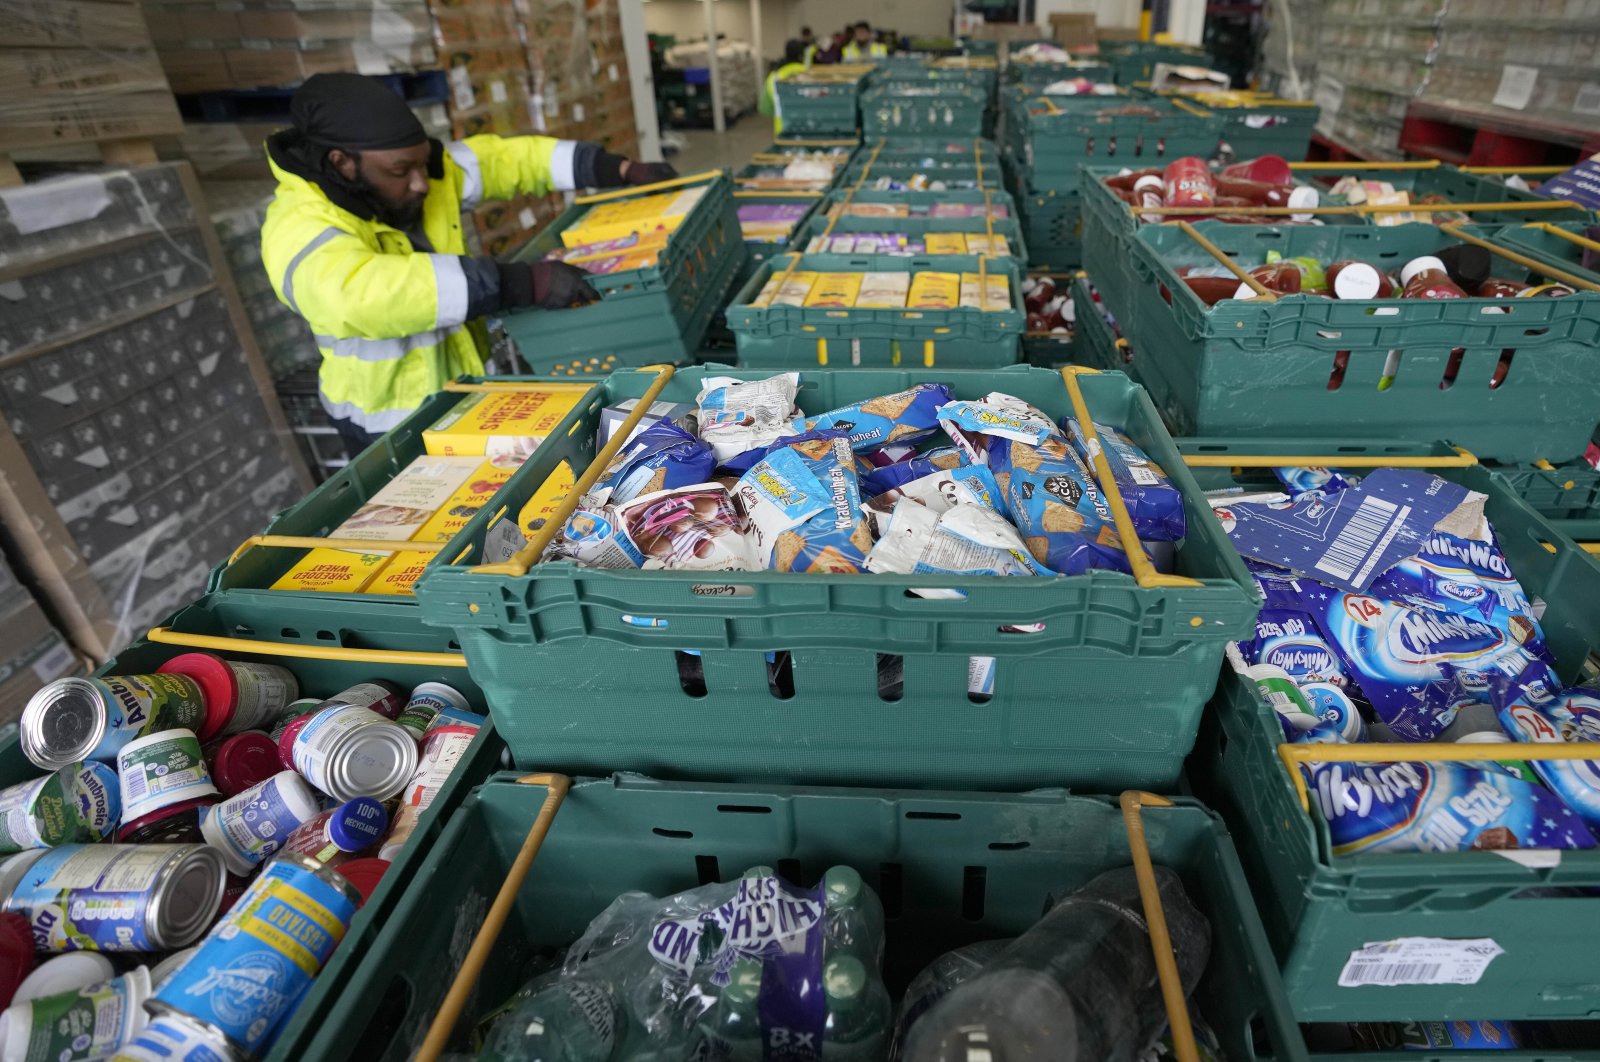 Bank makanan menjadi penyelamat bagi lebih banyak orang Inggris saat tagihan makanan dan bahan bakar melonjak